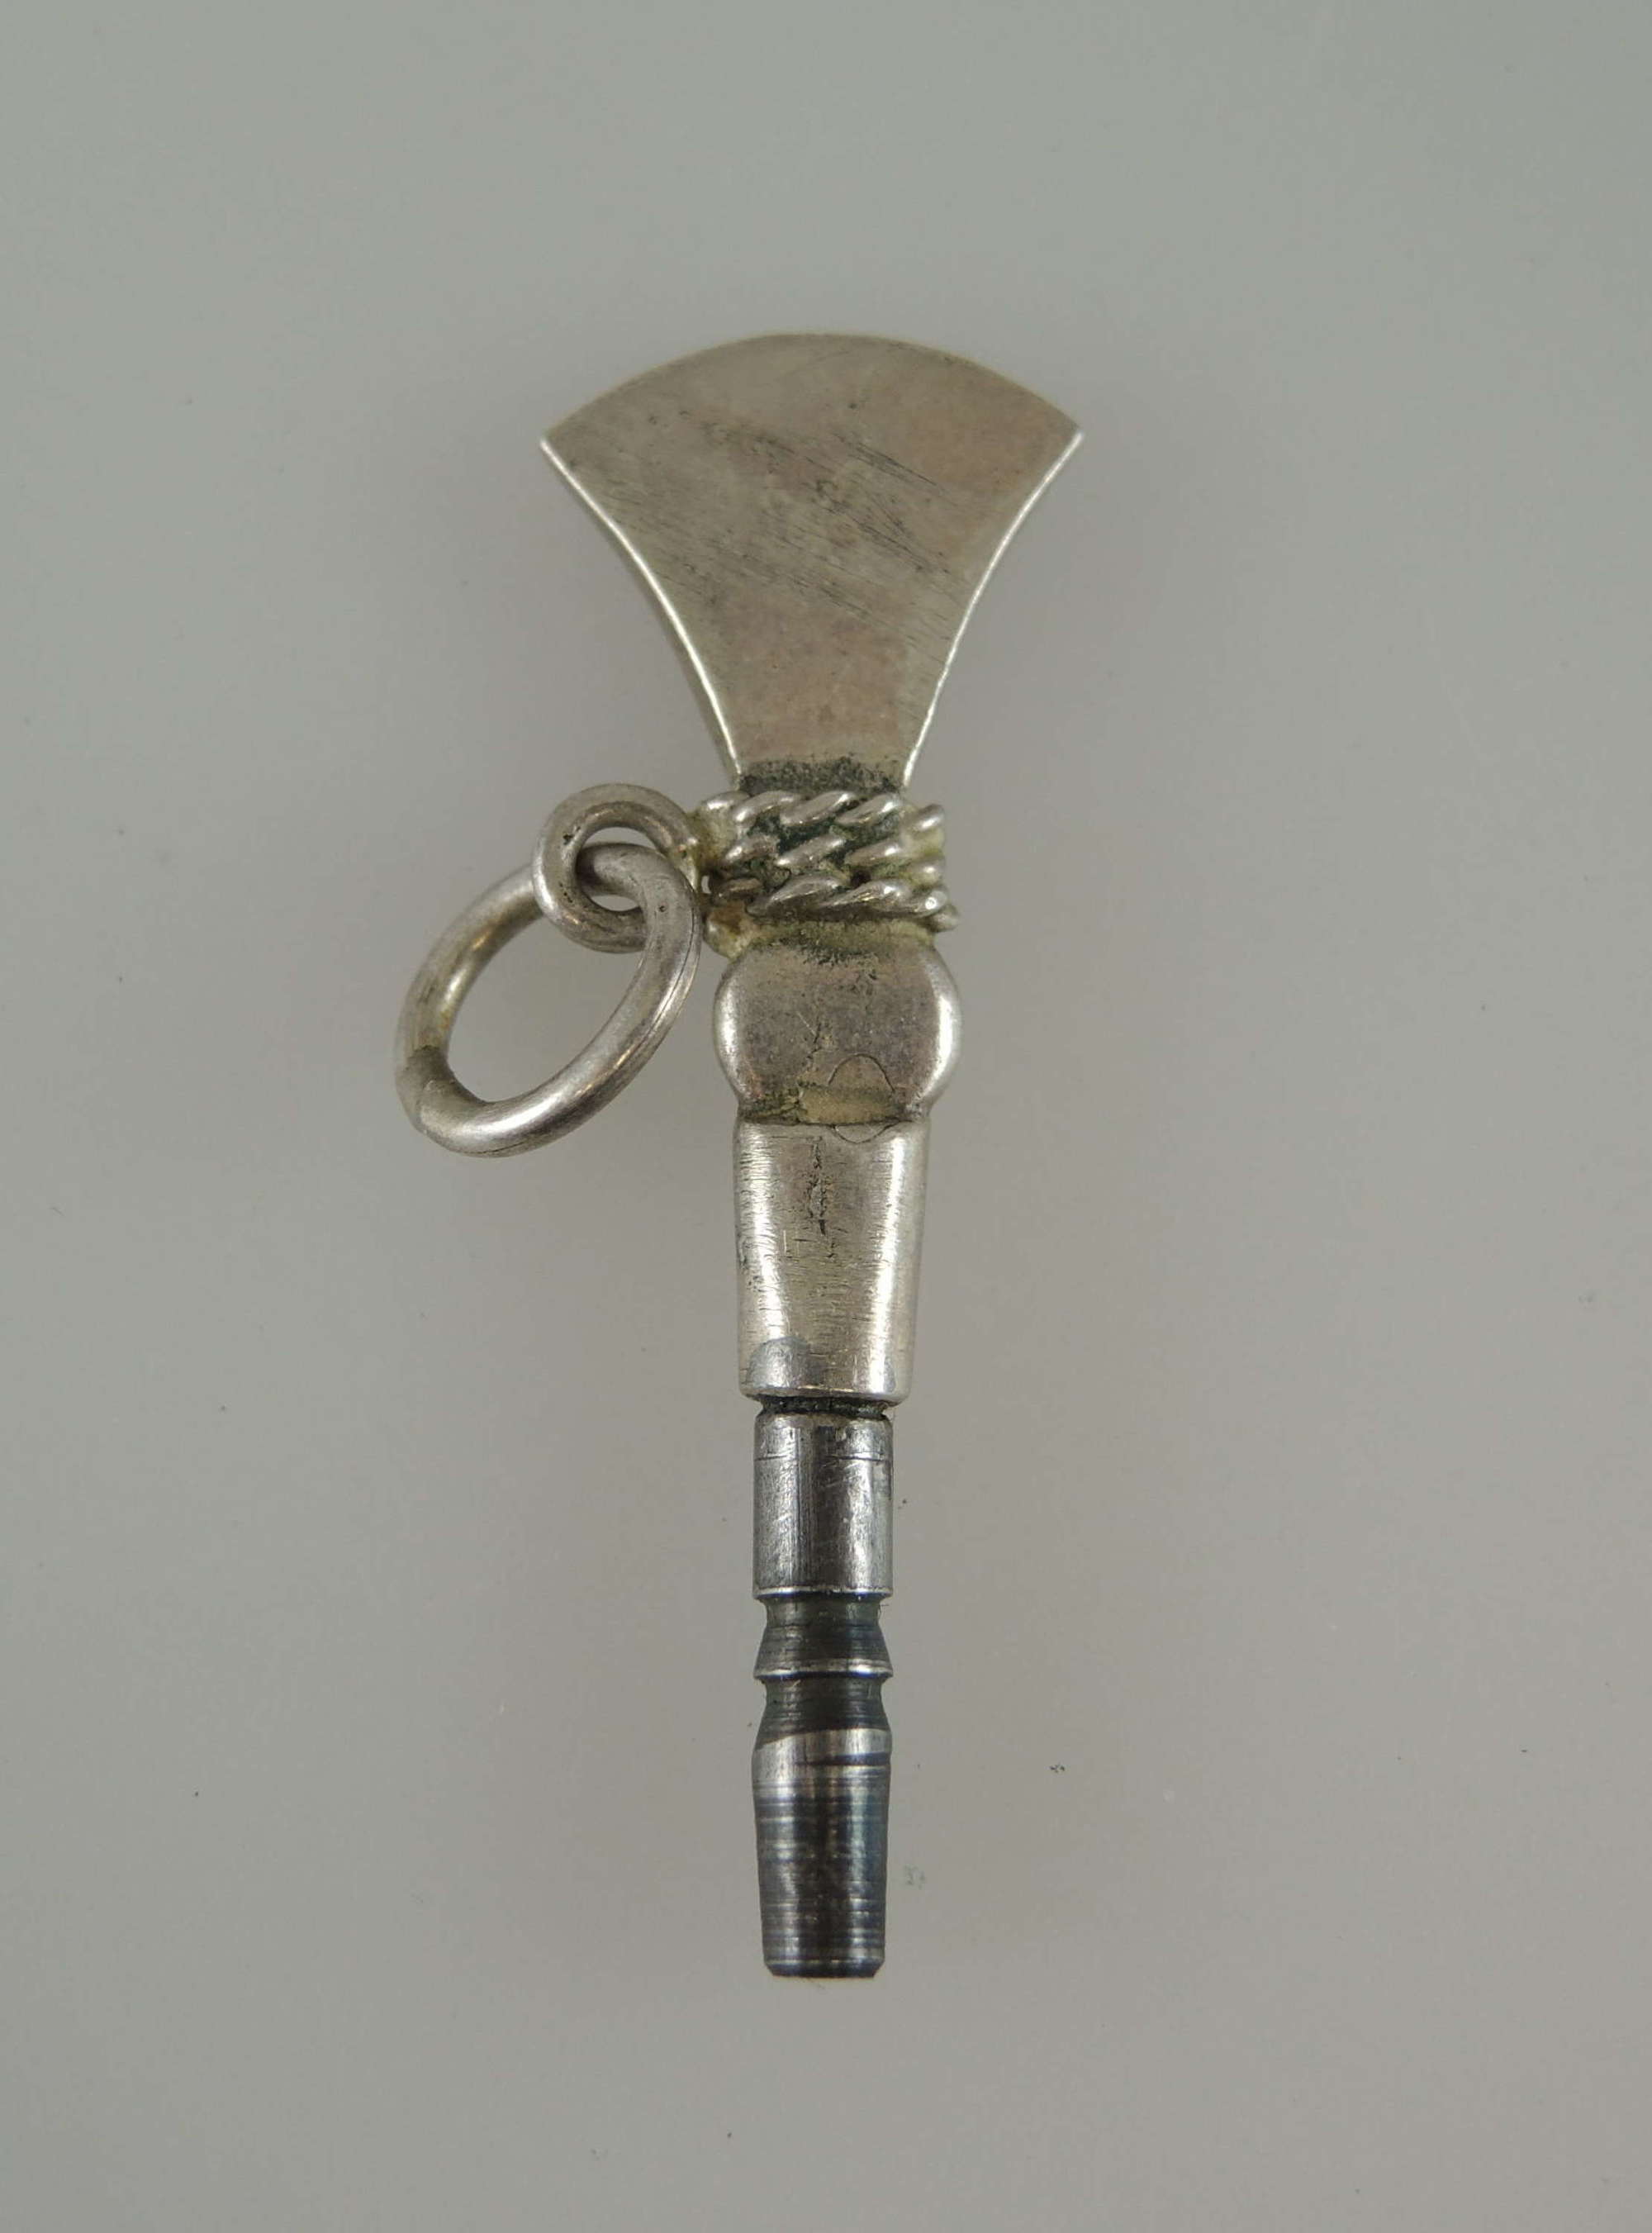 Unusual Hatchet shaped pocket watch key c1820